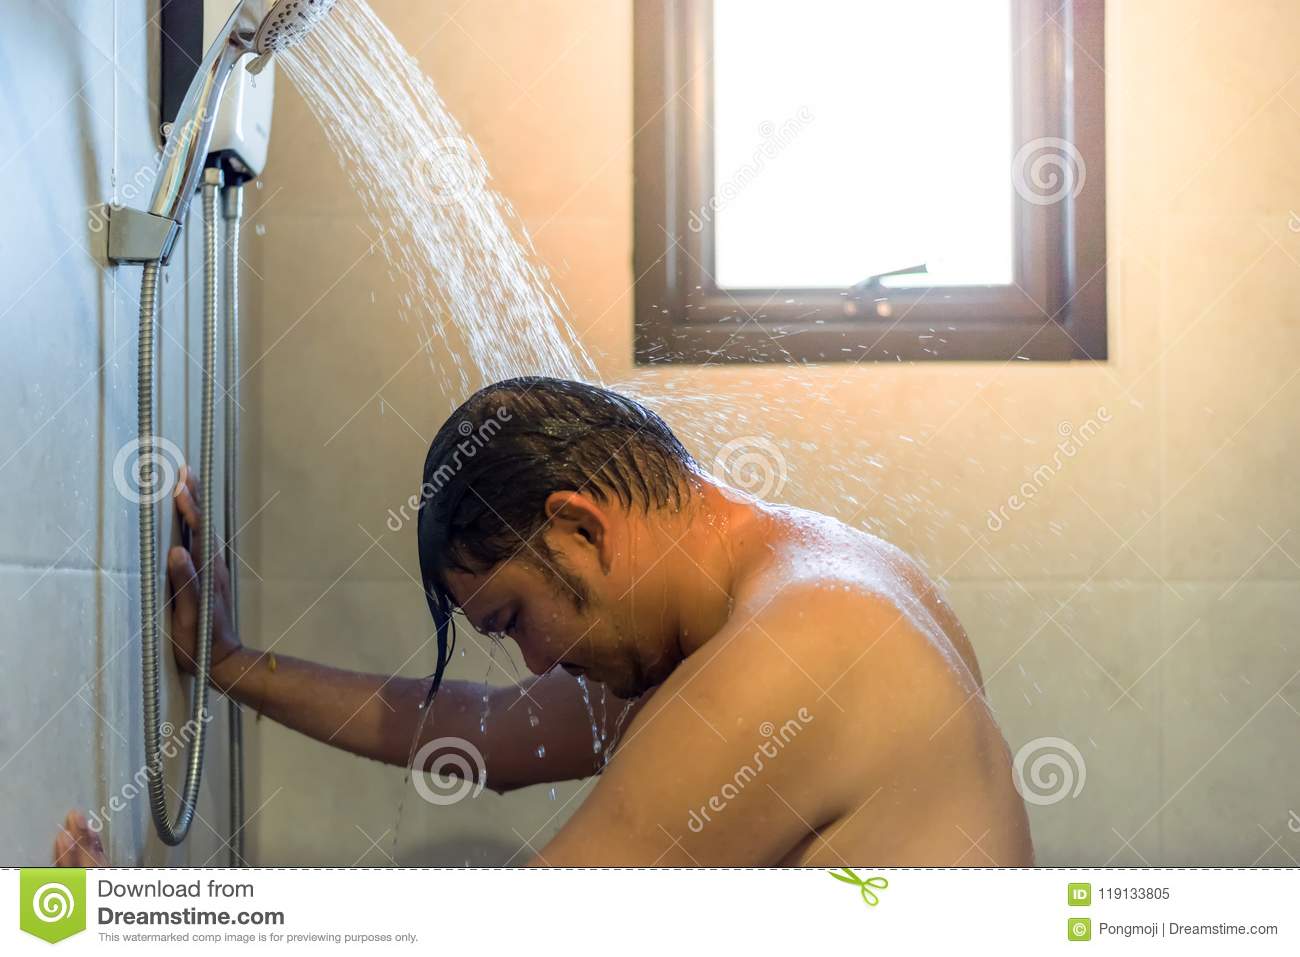 woman having sex in shower